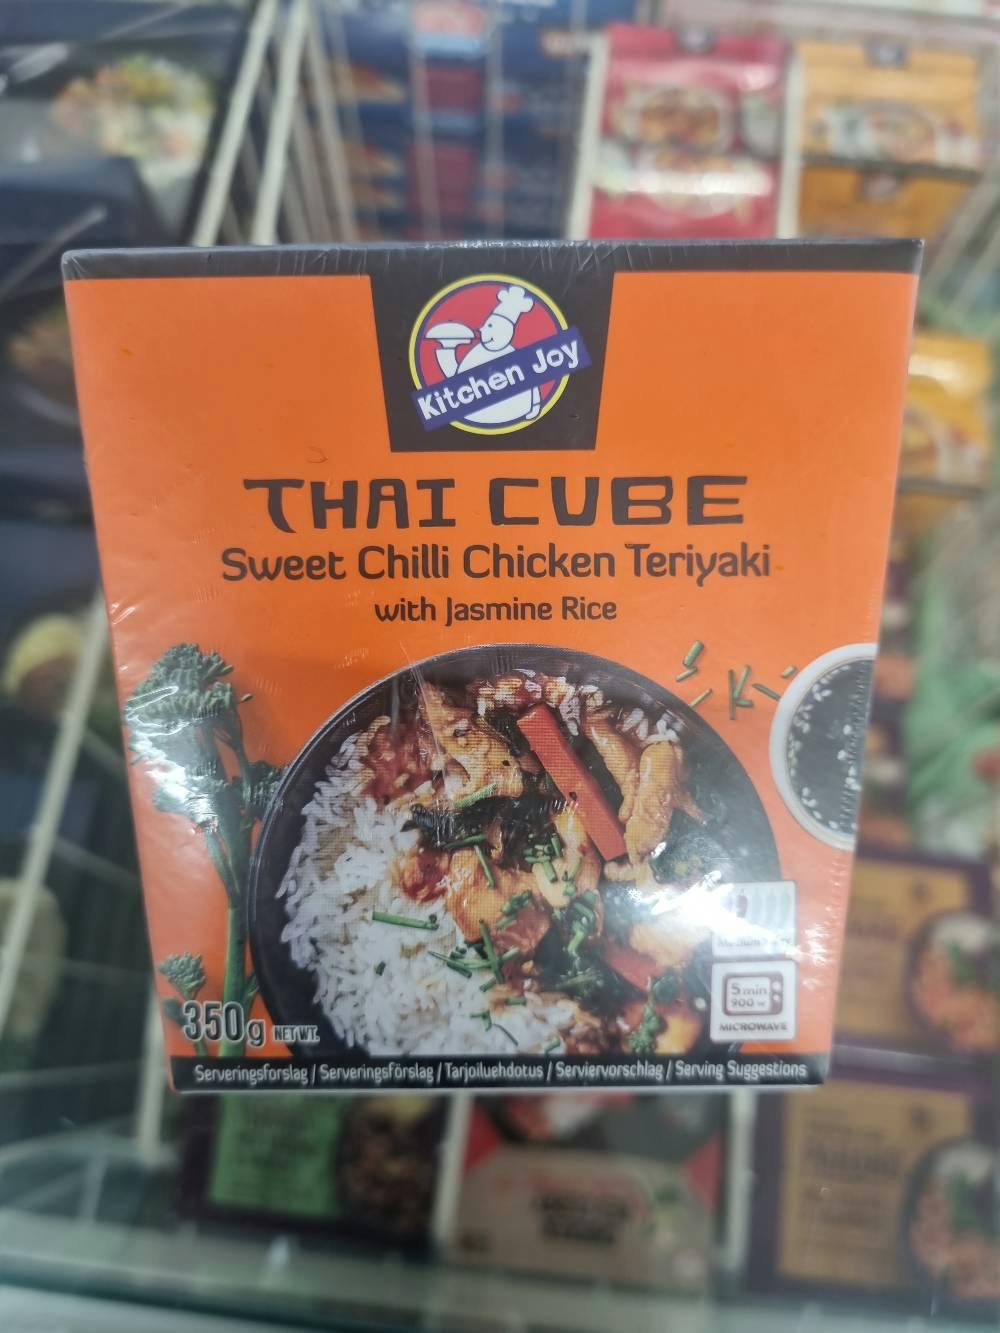 Kitchen Joy Thai cube, | Noba